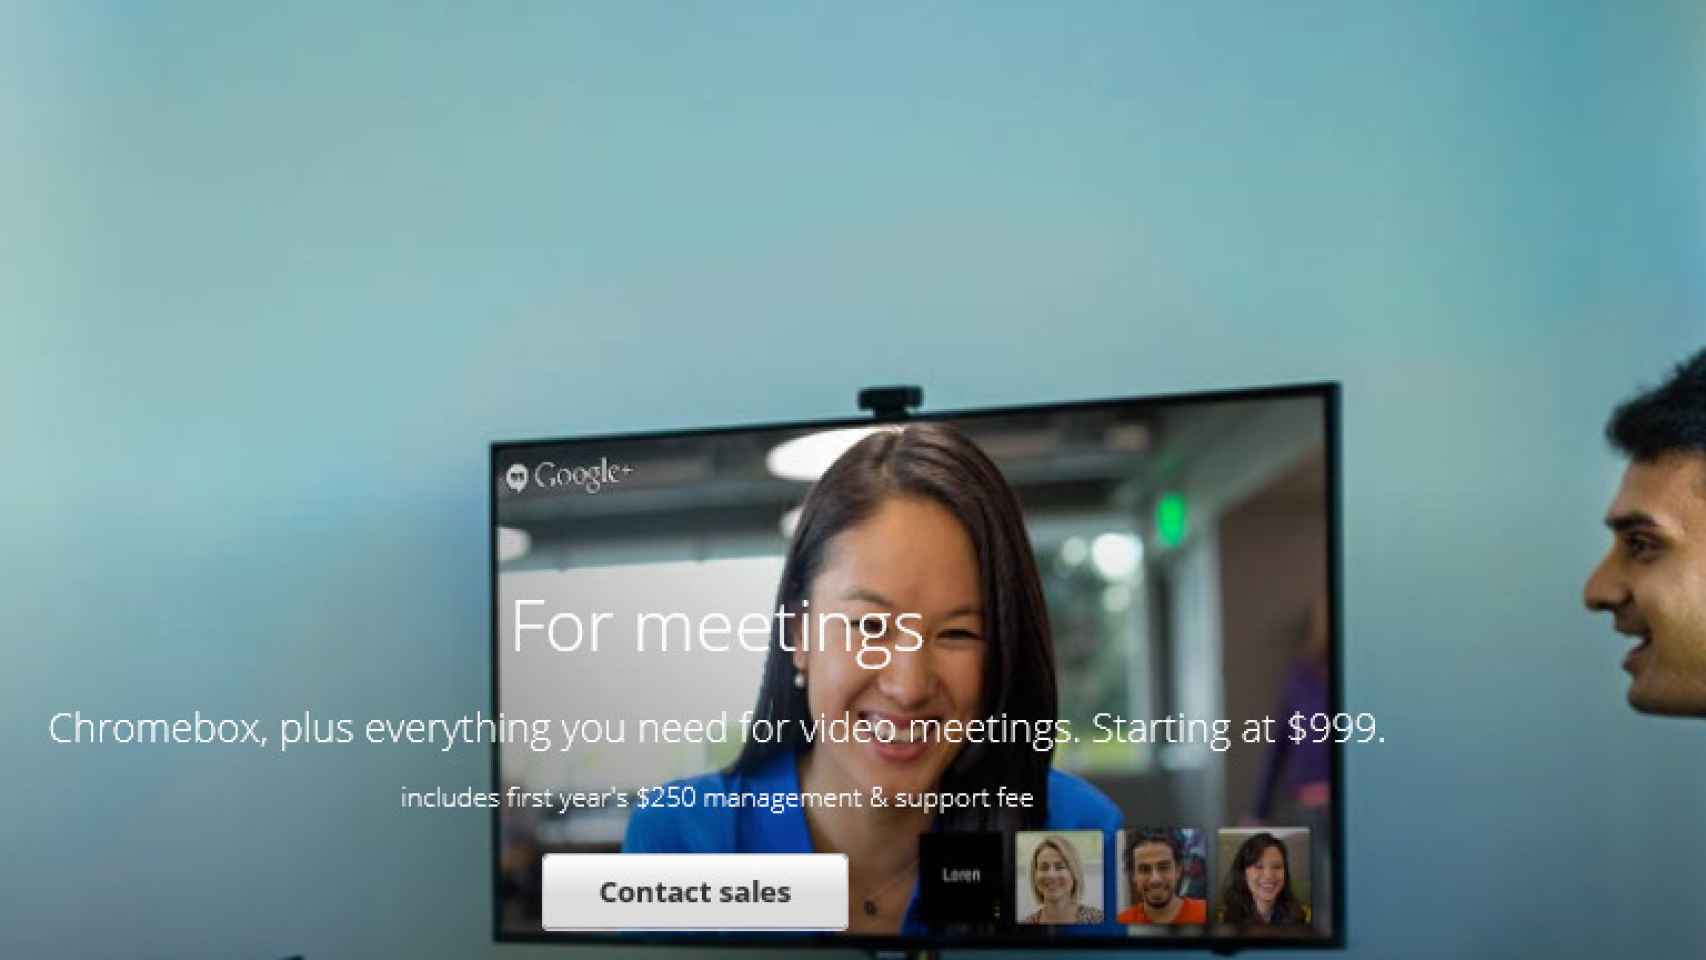 Chromebox for meetings: Cuando Chrome llega al sector profesional